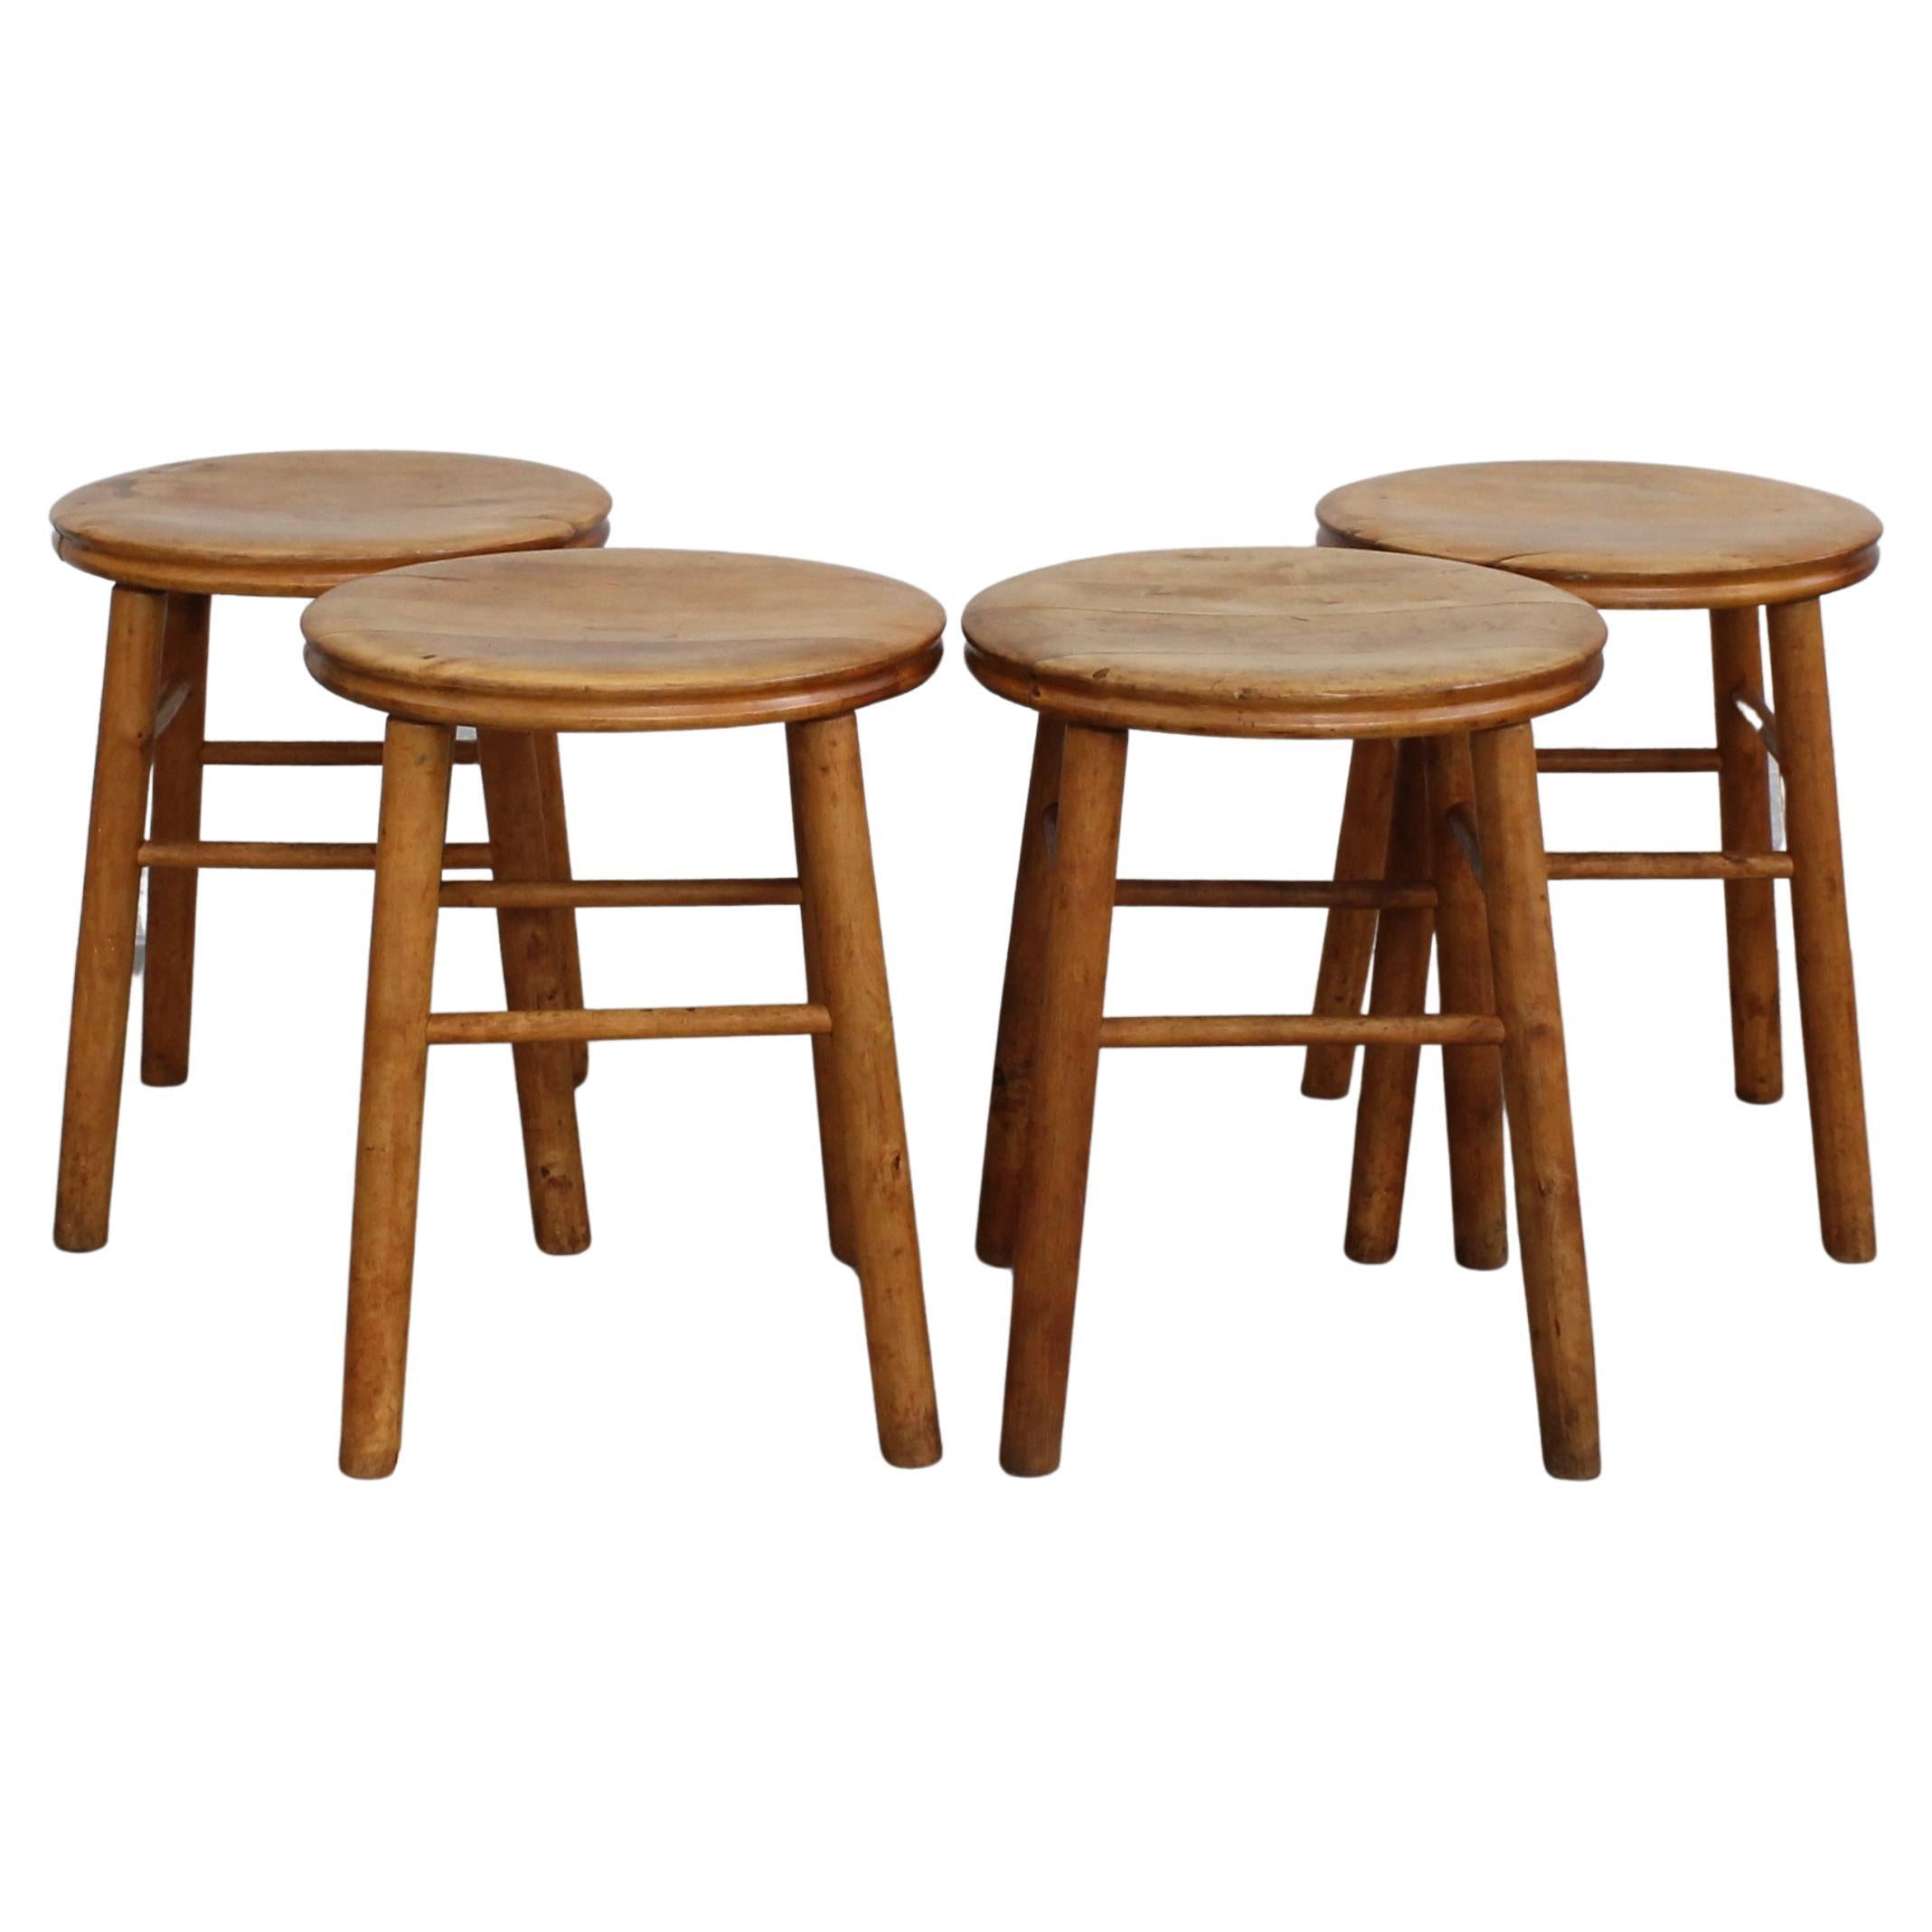 Four modernist birch stools, minimalist design, Sweden, 1930s For Sale